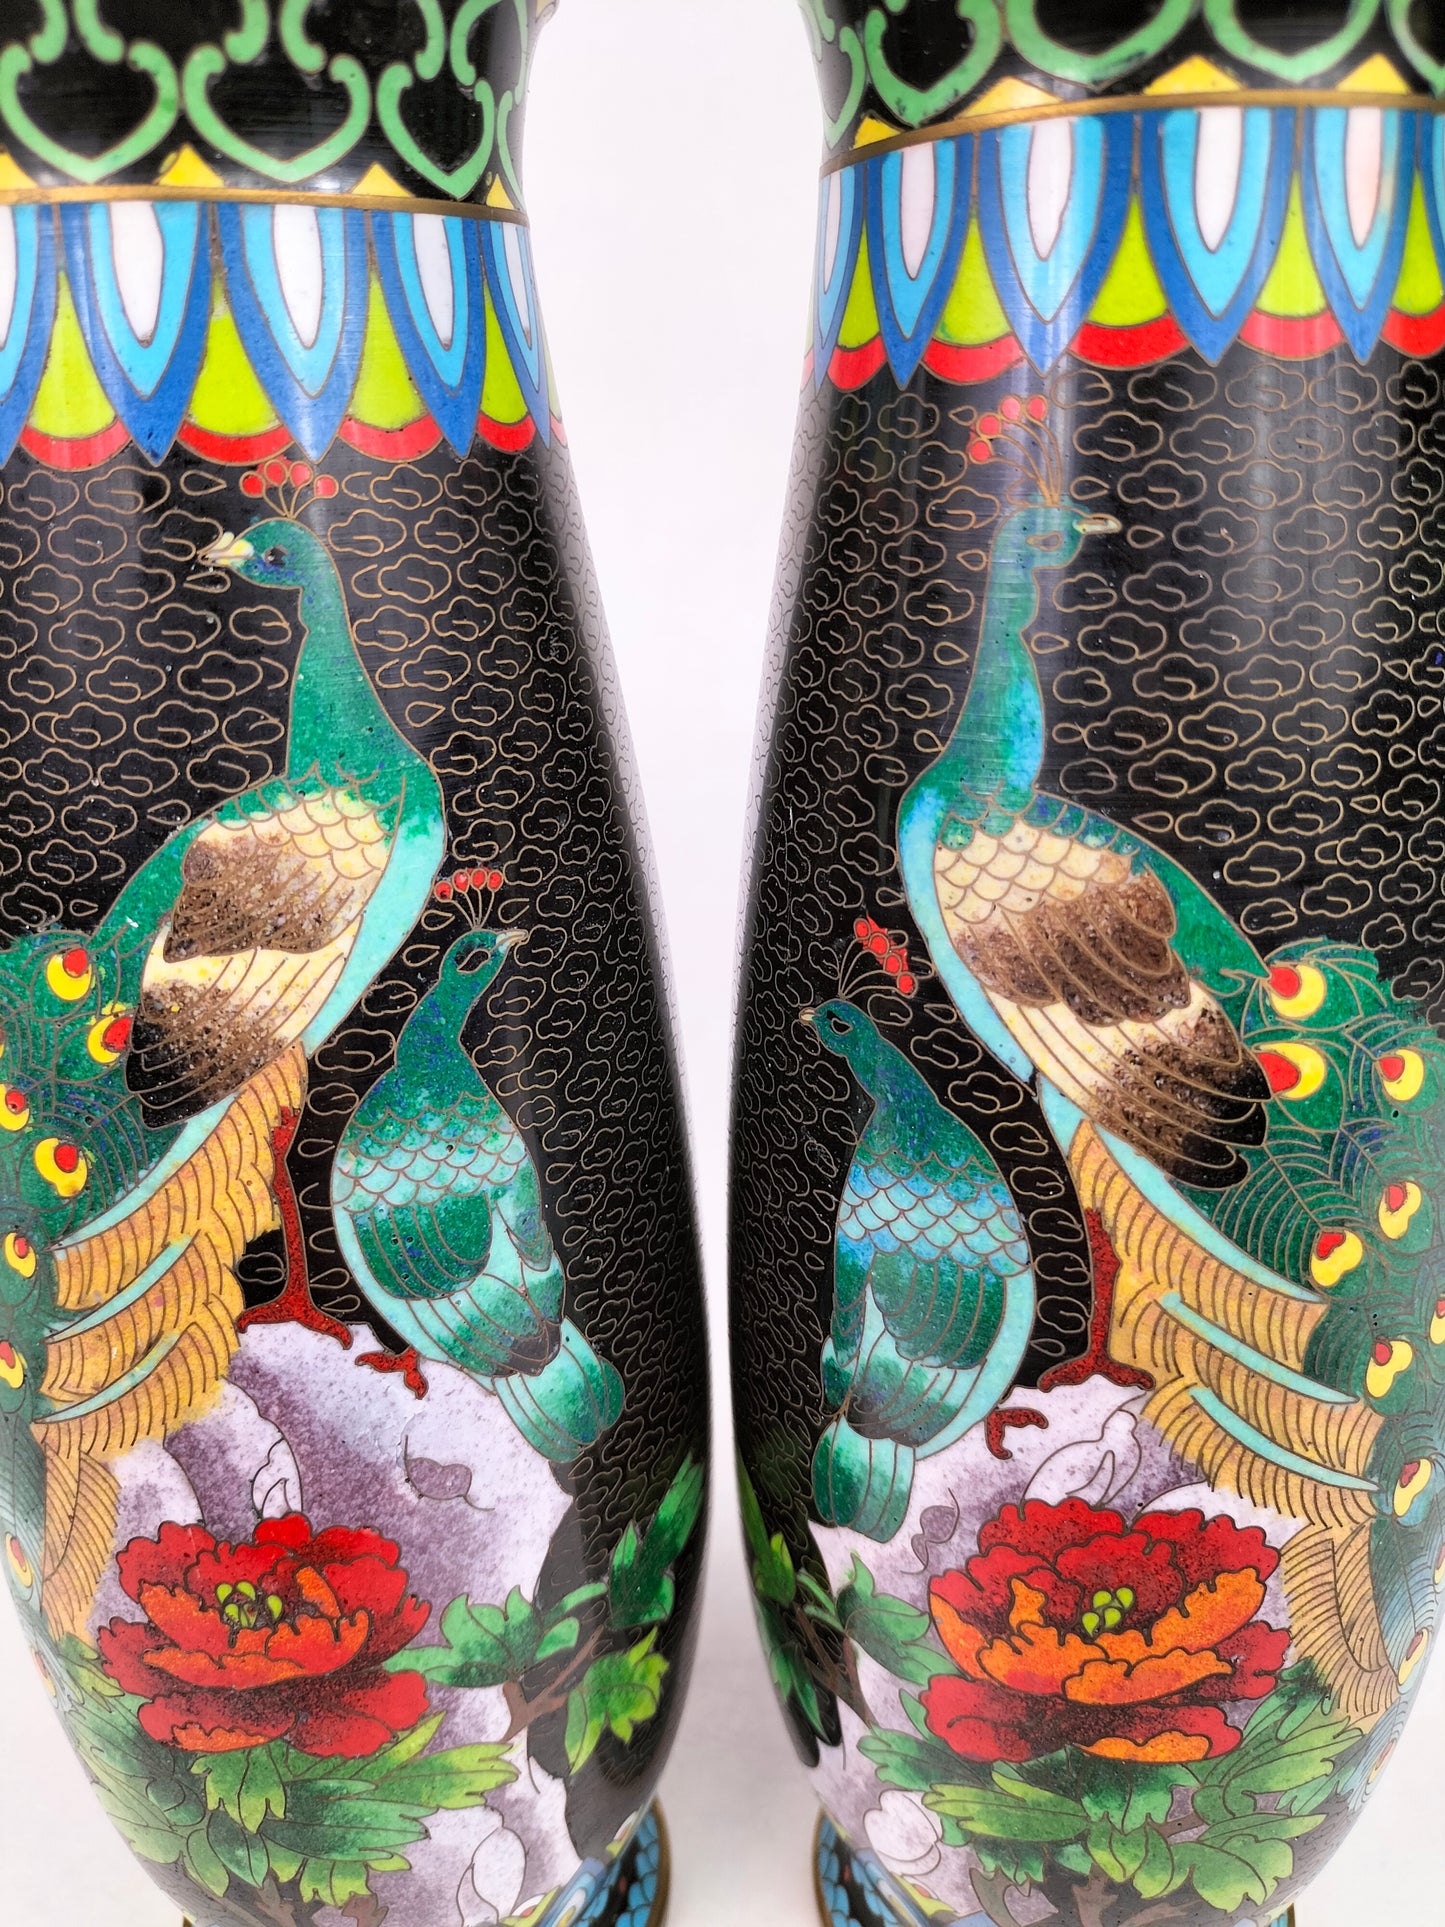 Par de vasos cloisonne chineses decorados com pavões // século XX